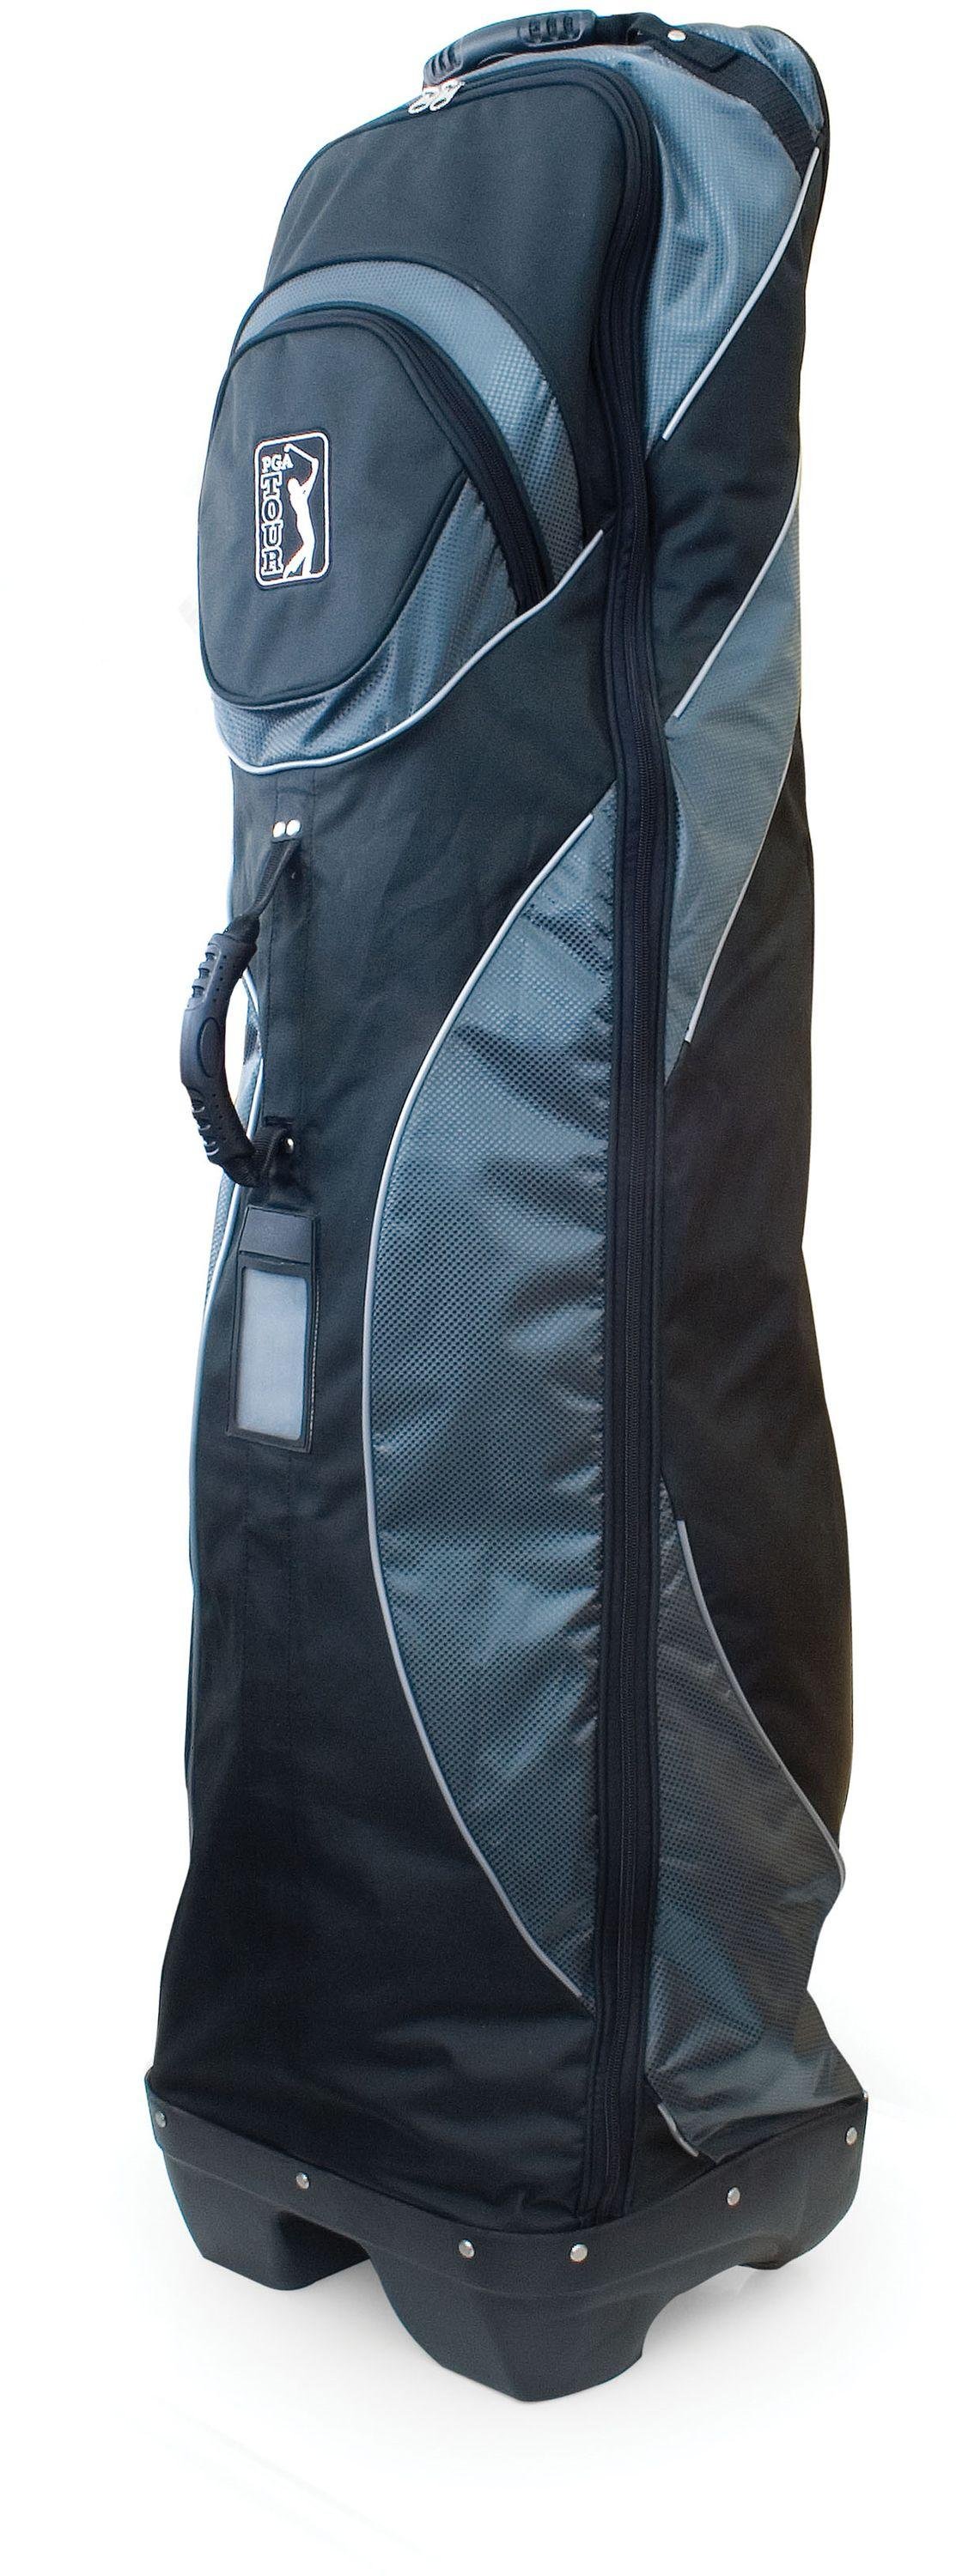 PGA Tour Travel Bag with Hard Plastic Base - Black/Grey.